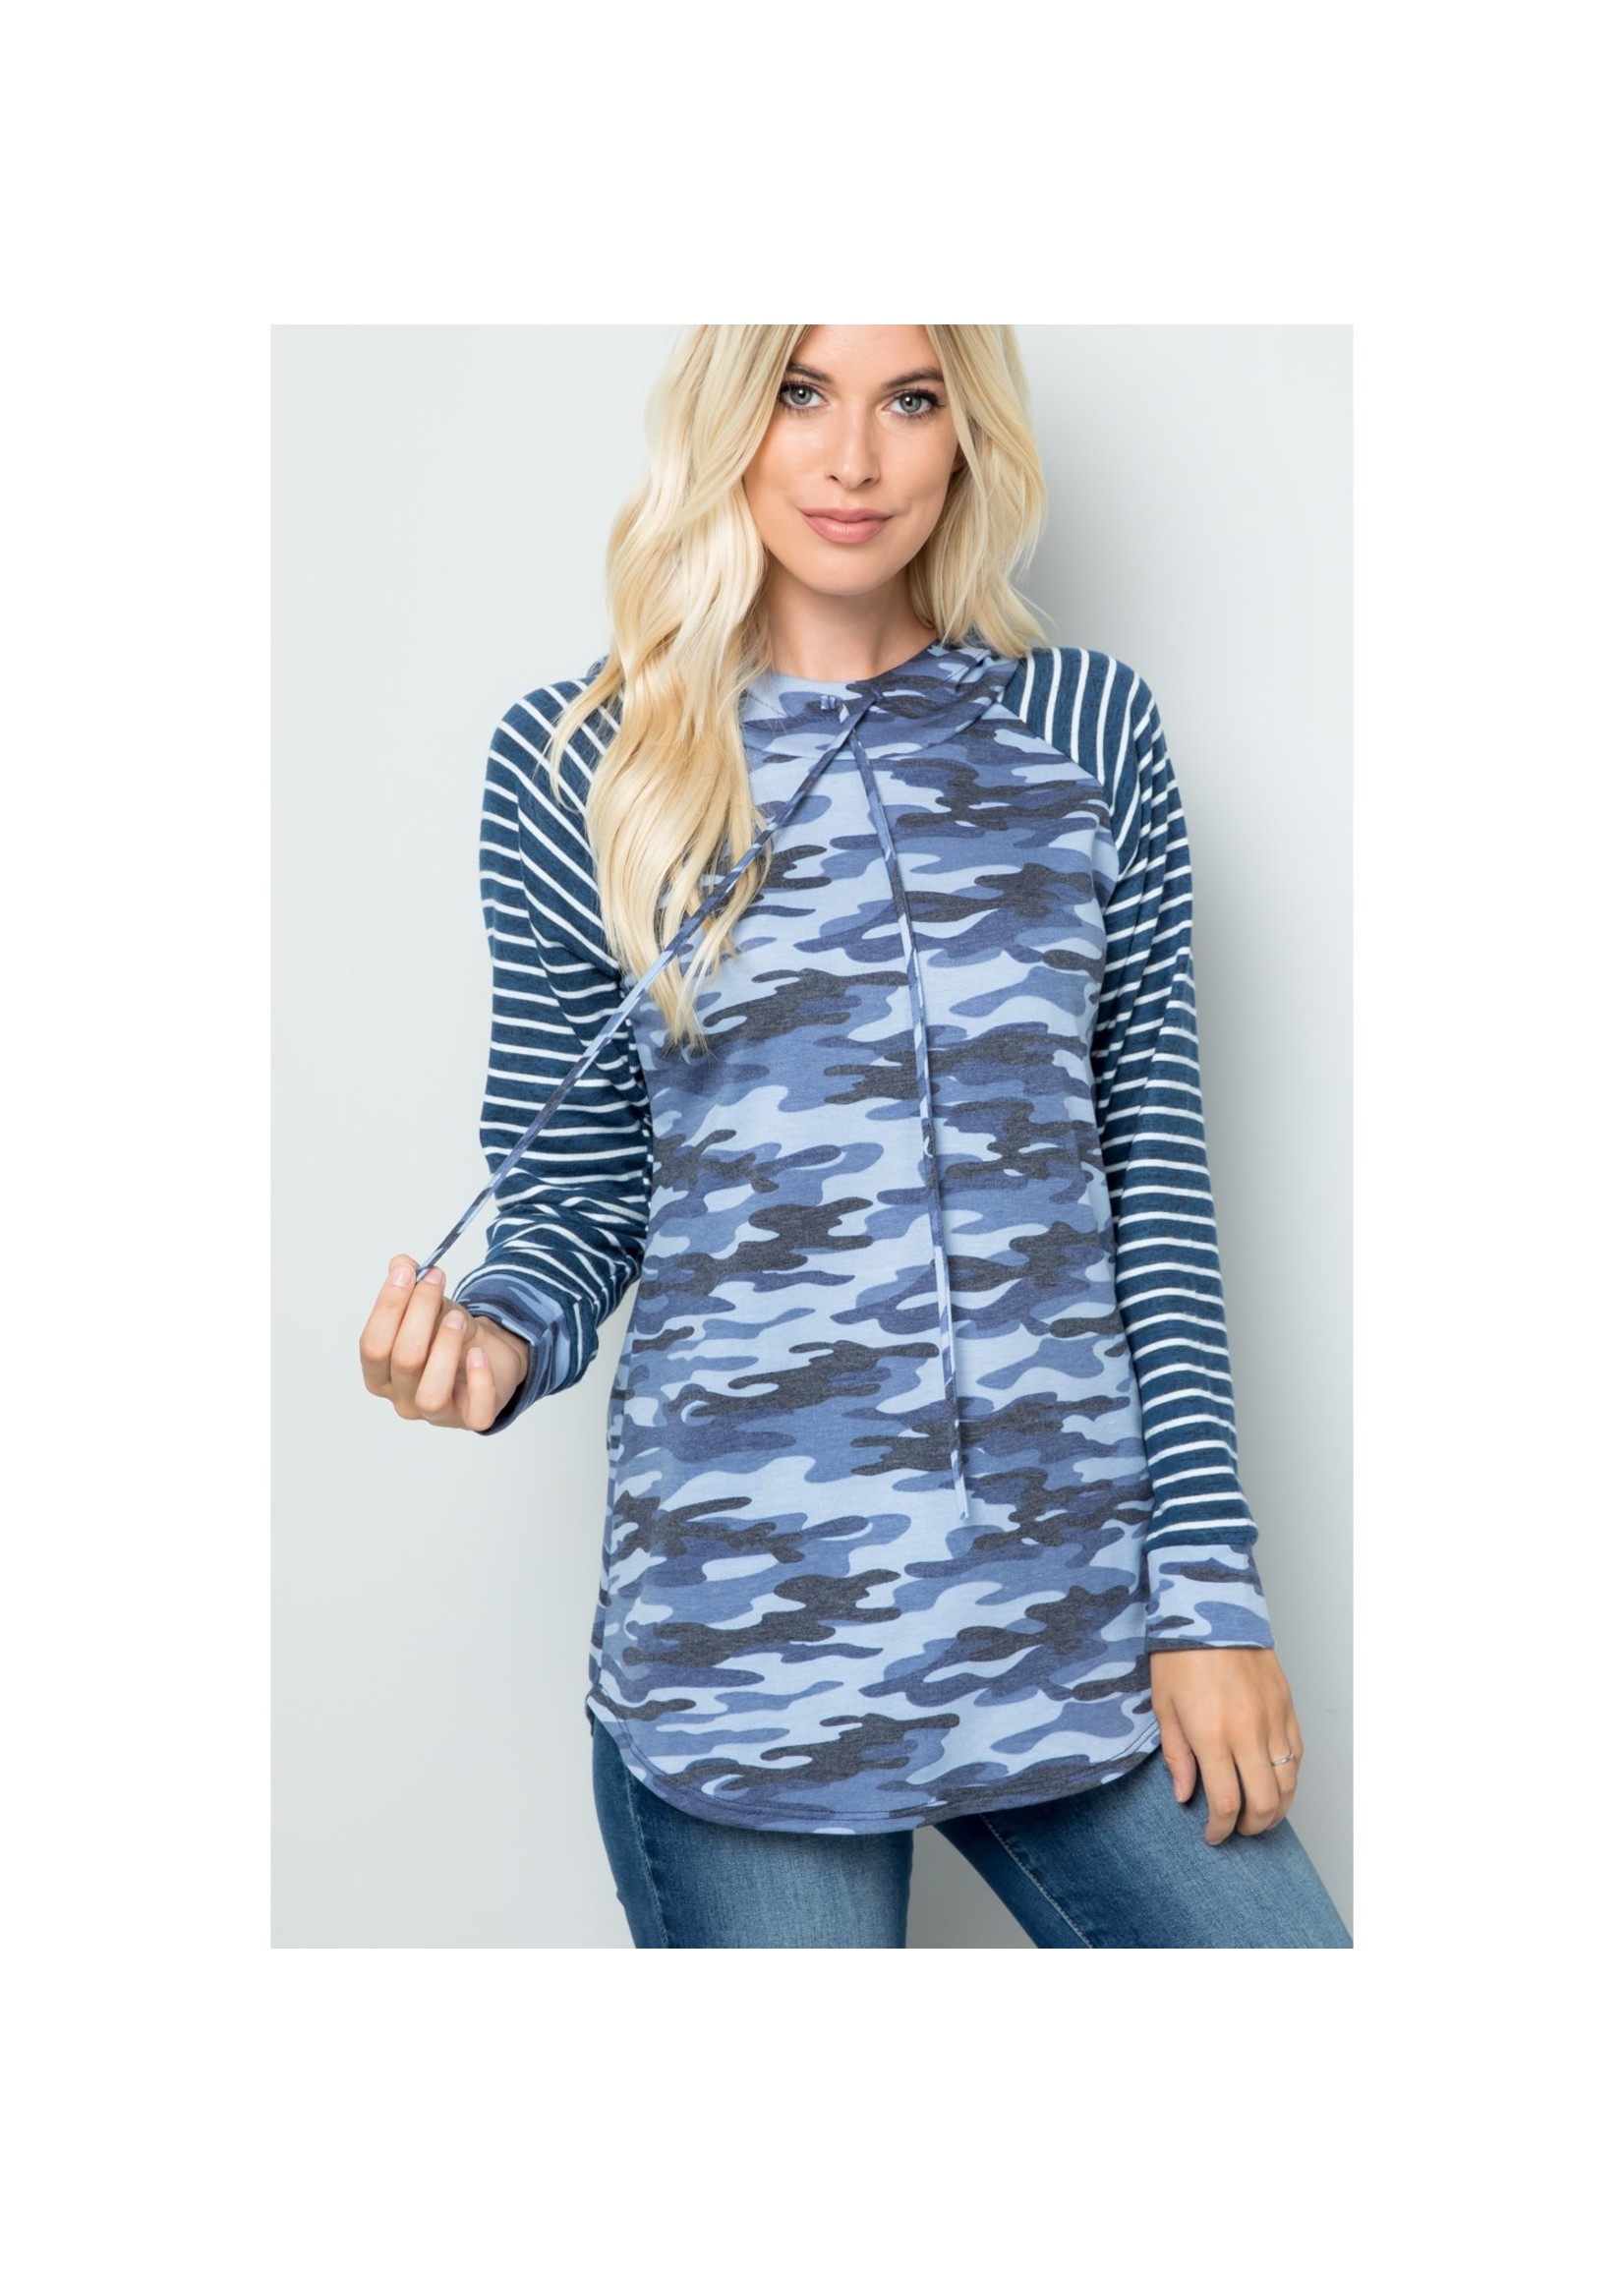 Celeste Clothing Navy Camo Sweater